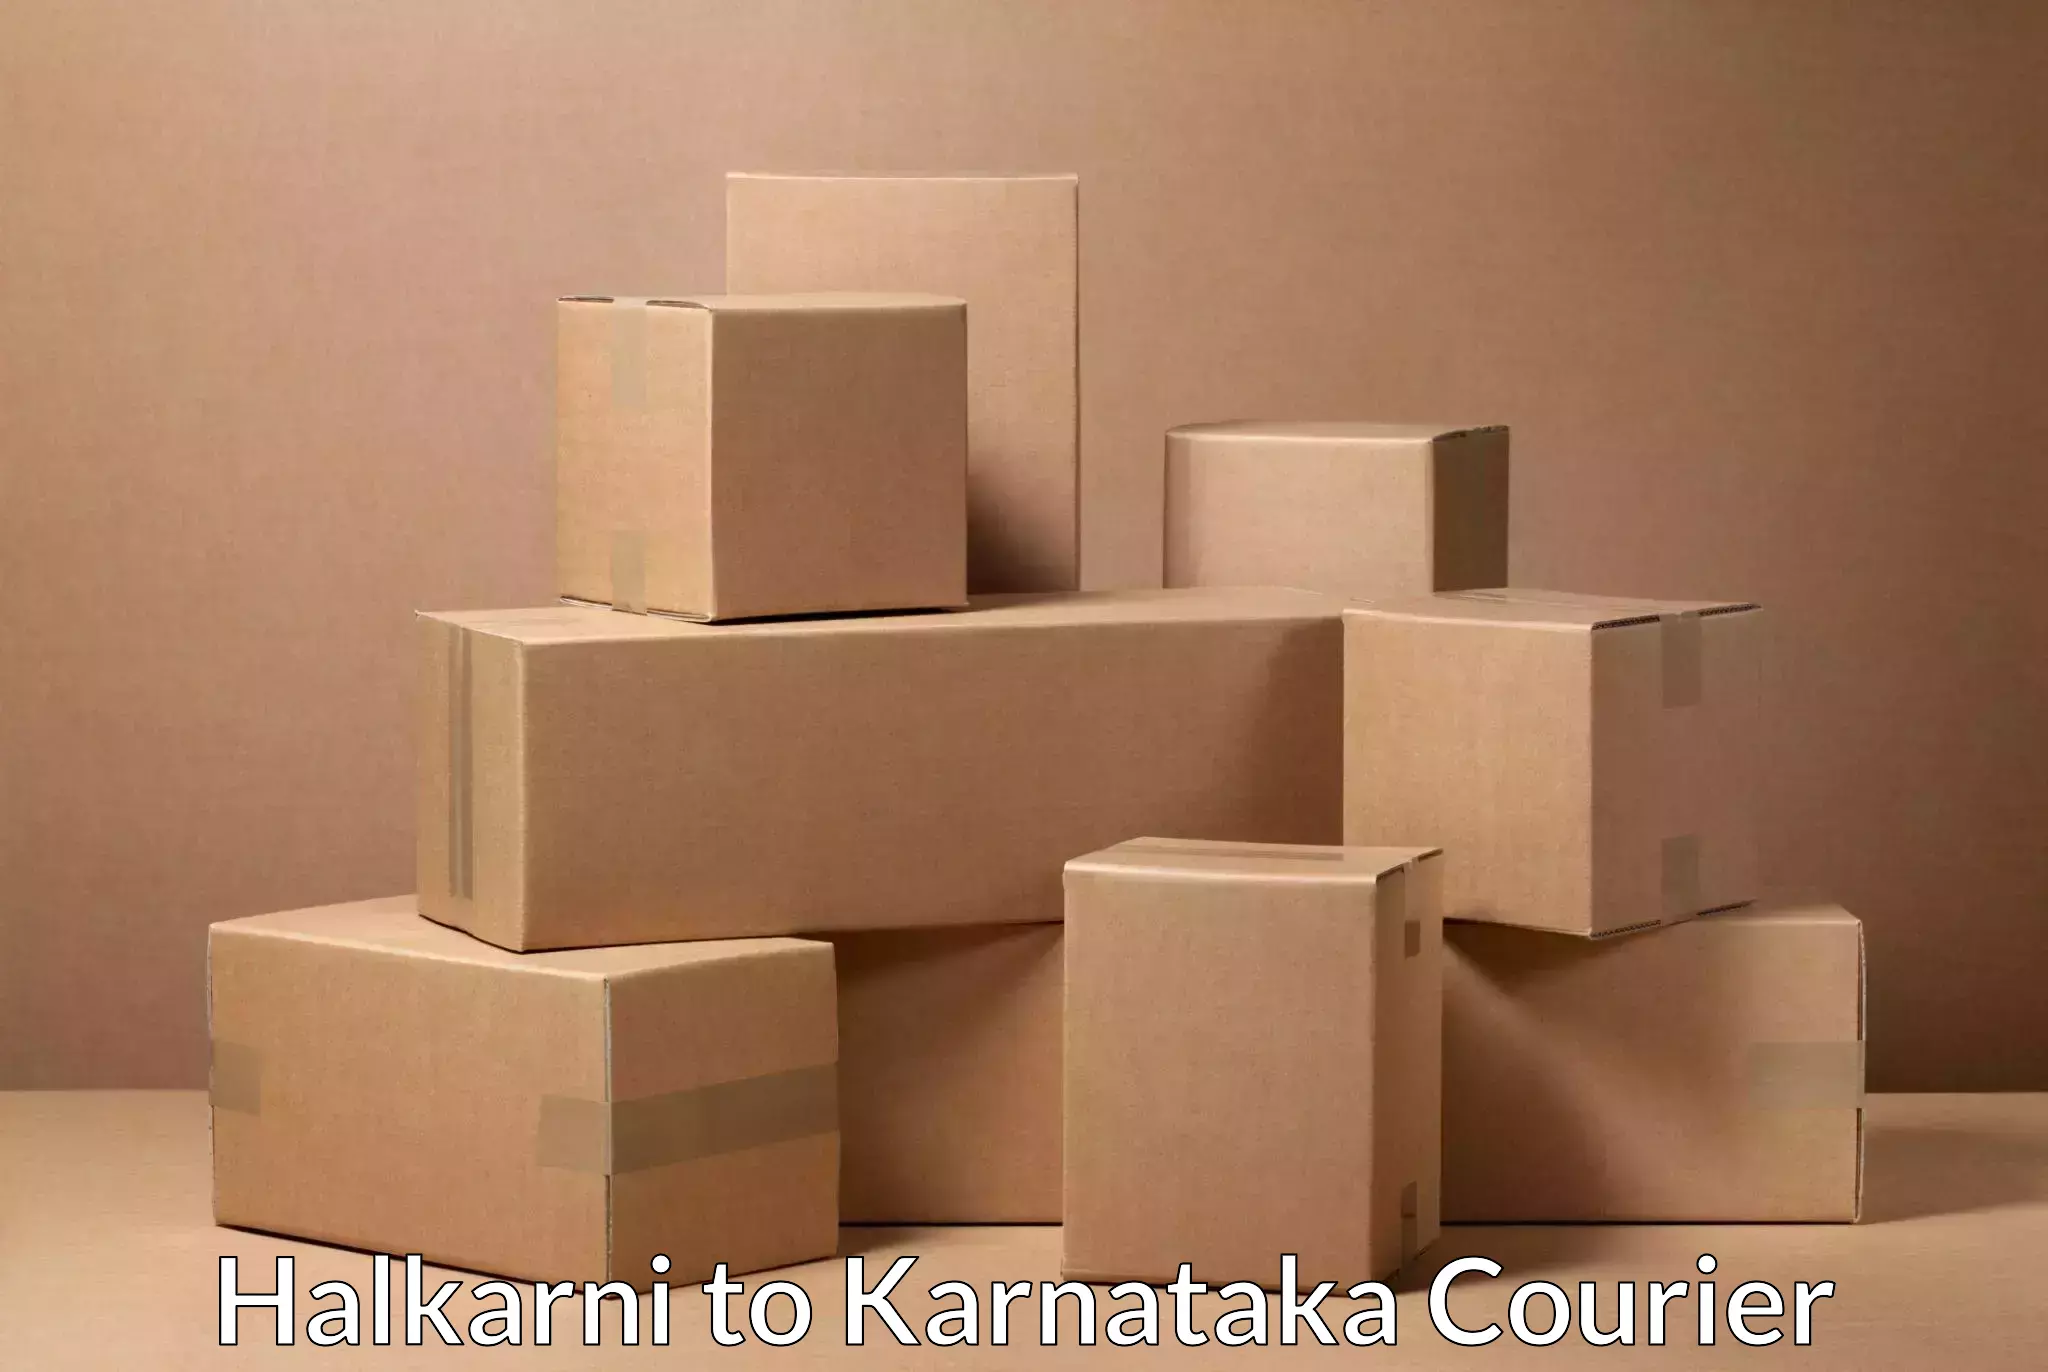 Efficient freight service Halkarni to Karnataka